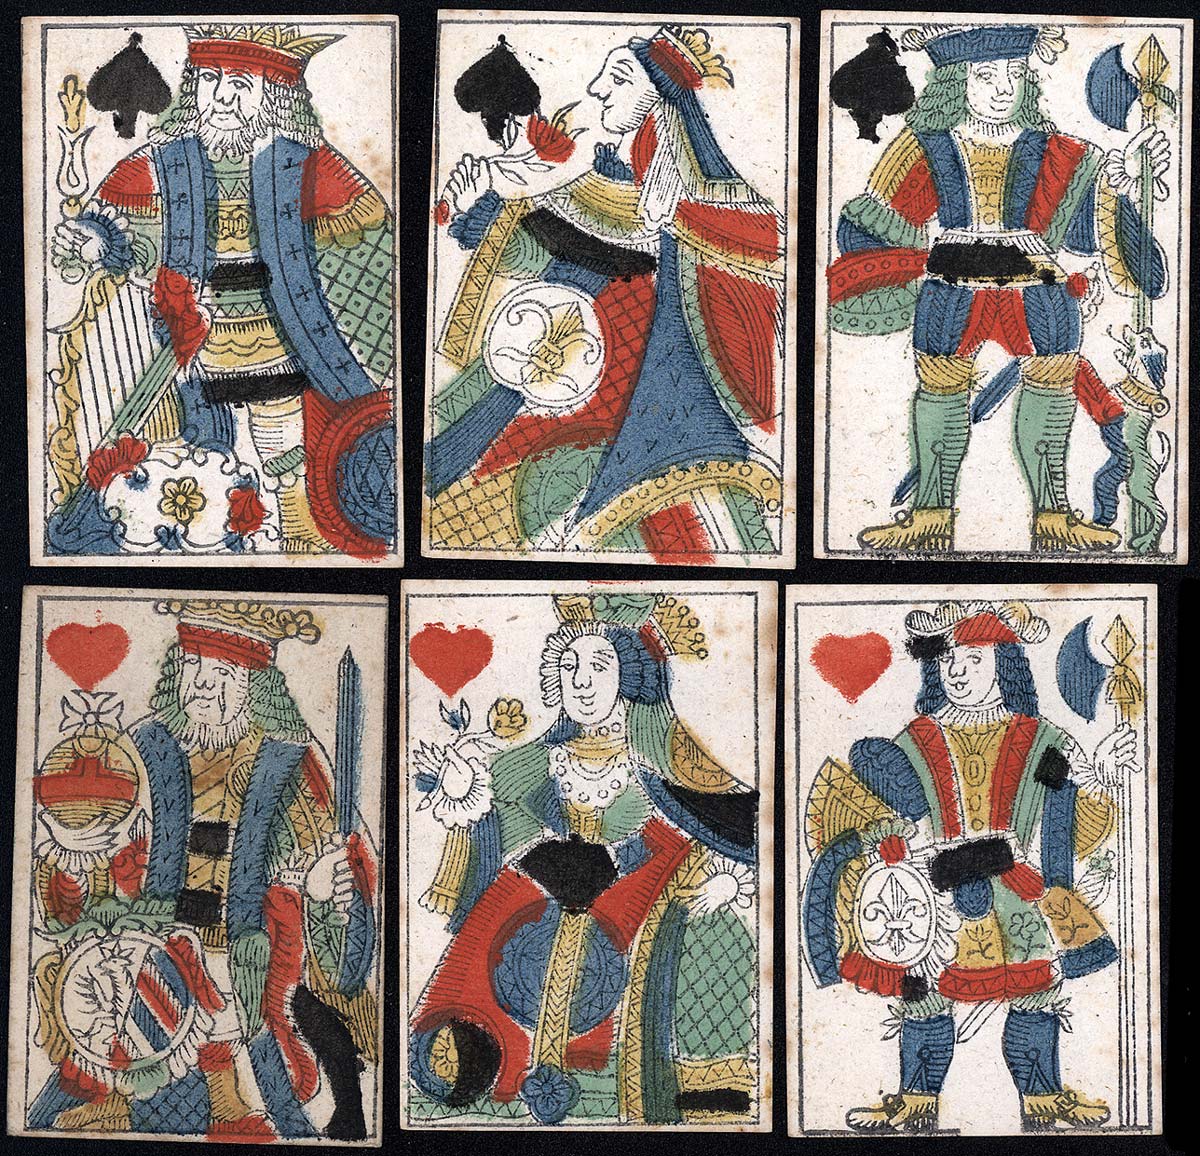 playing cards by I. Schenck, Nuremberg, late XVIIIth century